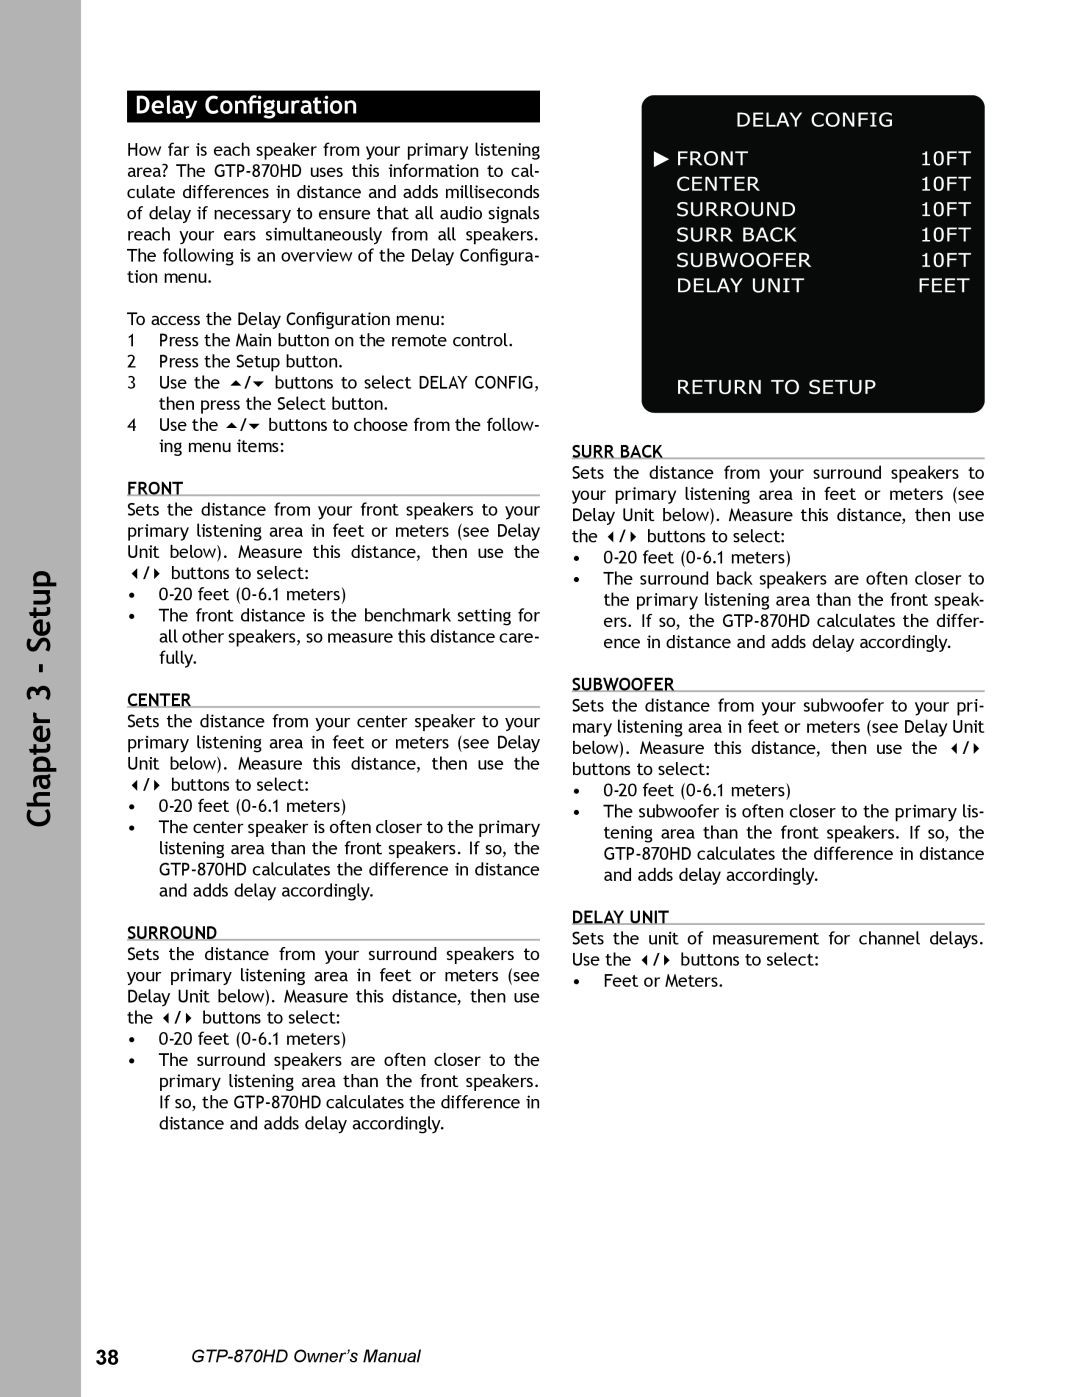 Adcom GTP-870HD user manual Delay Conﬁguration, Delay Unit, Setup, Front, Center, Surround, Surr Back, Subwoofer 